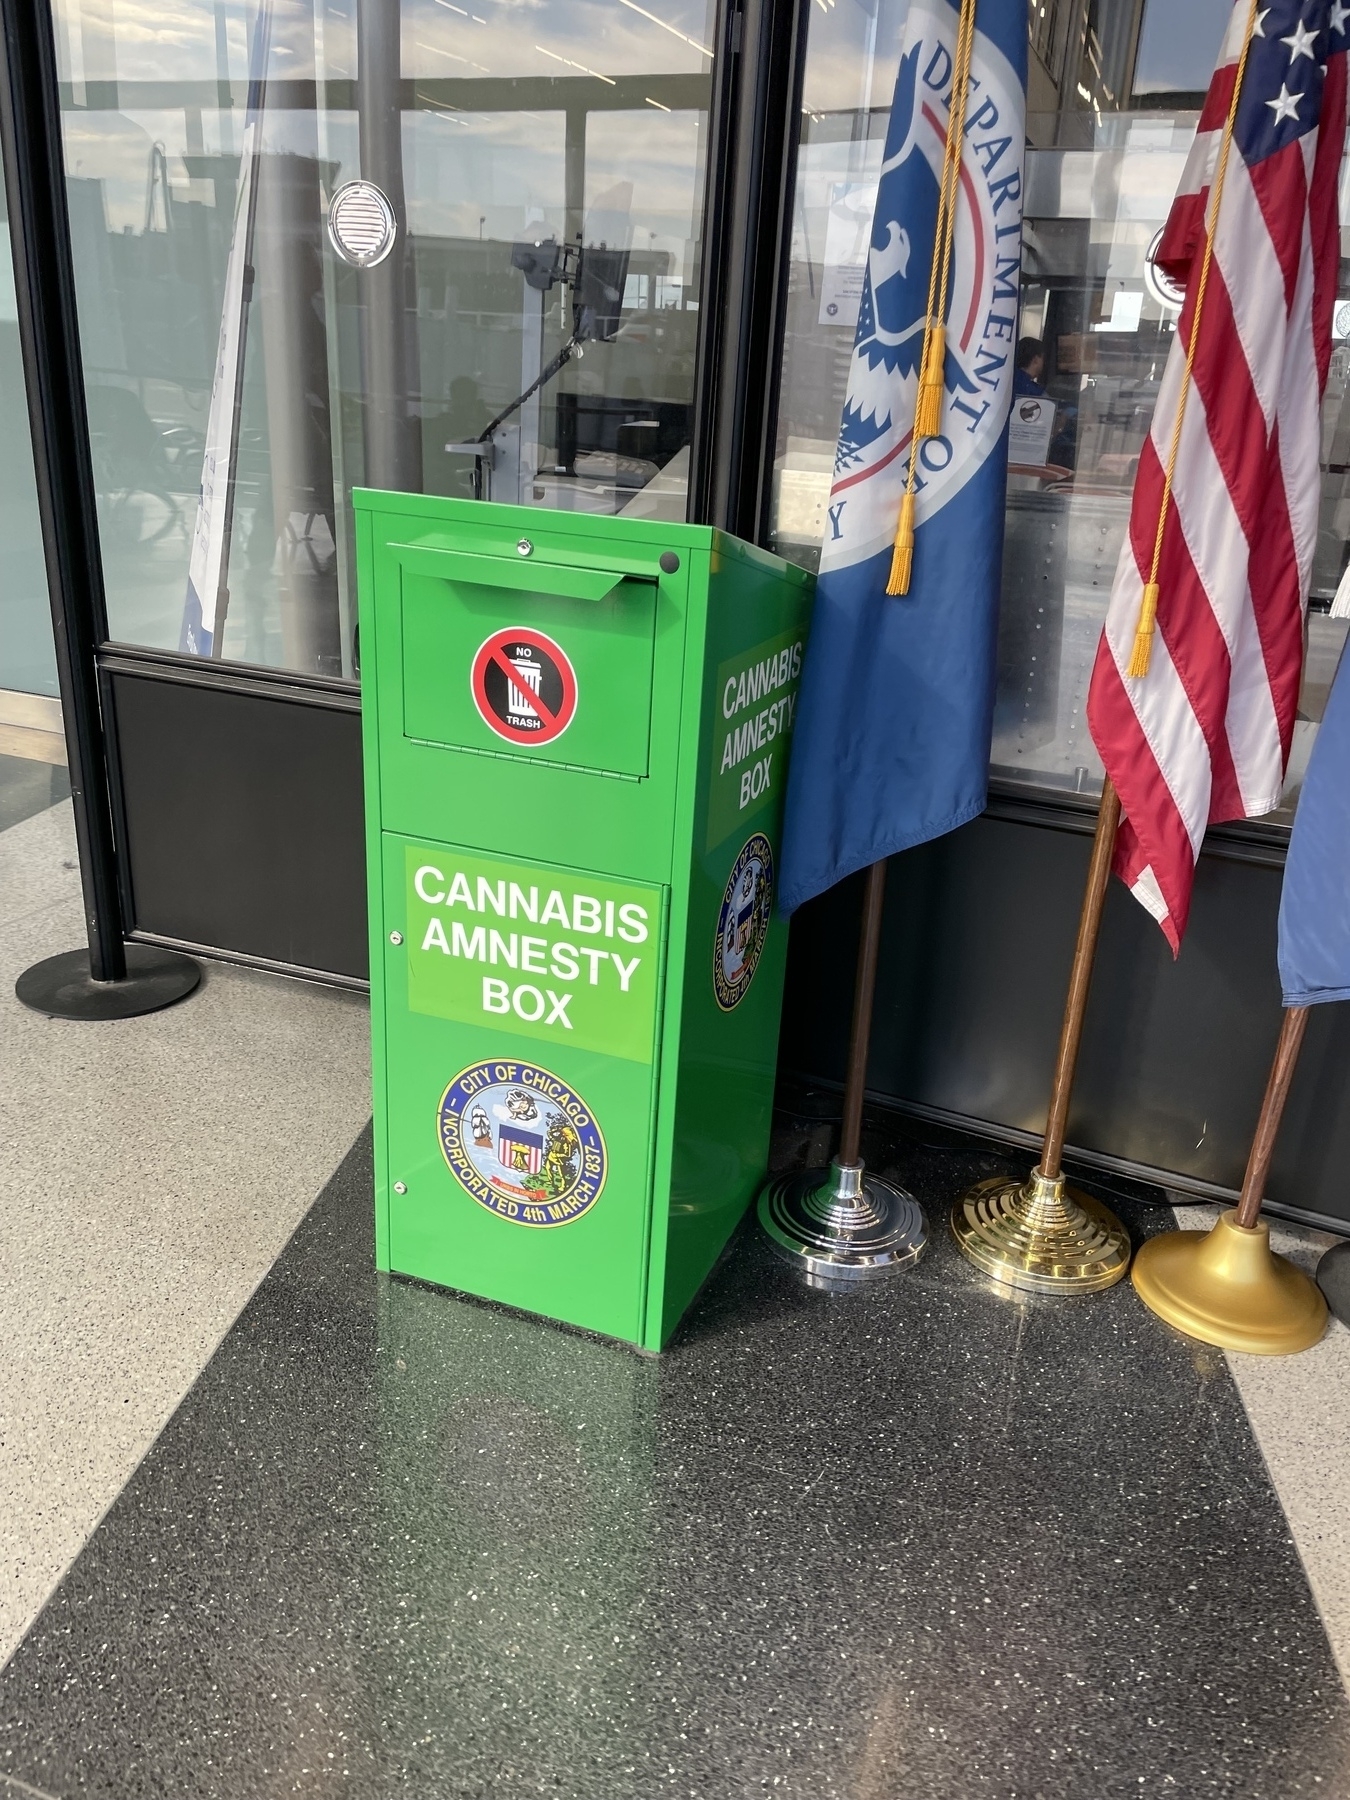 Cannabis amnesty box at O’Hare International Airport